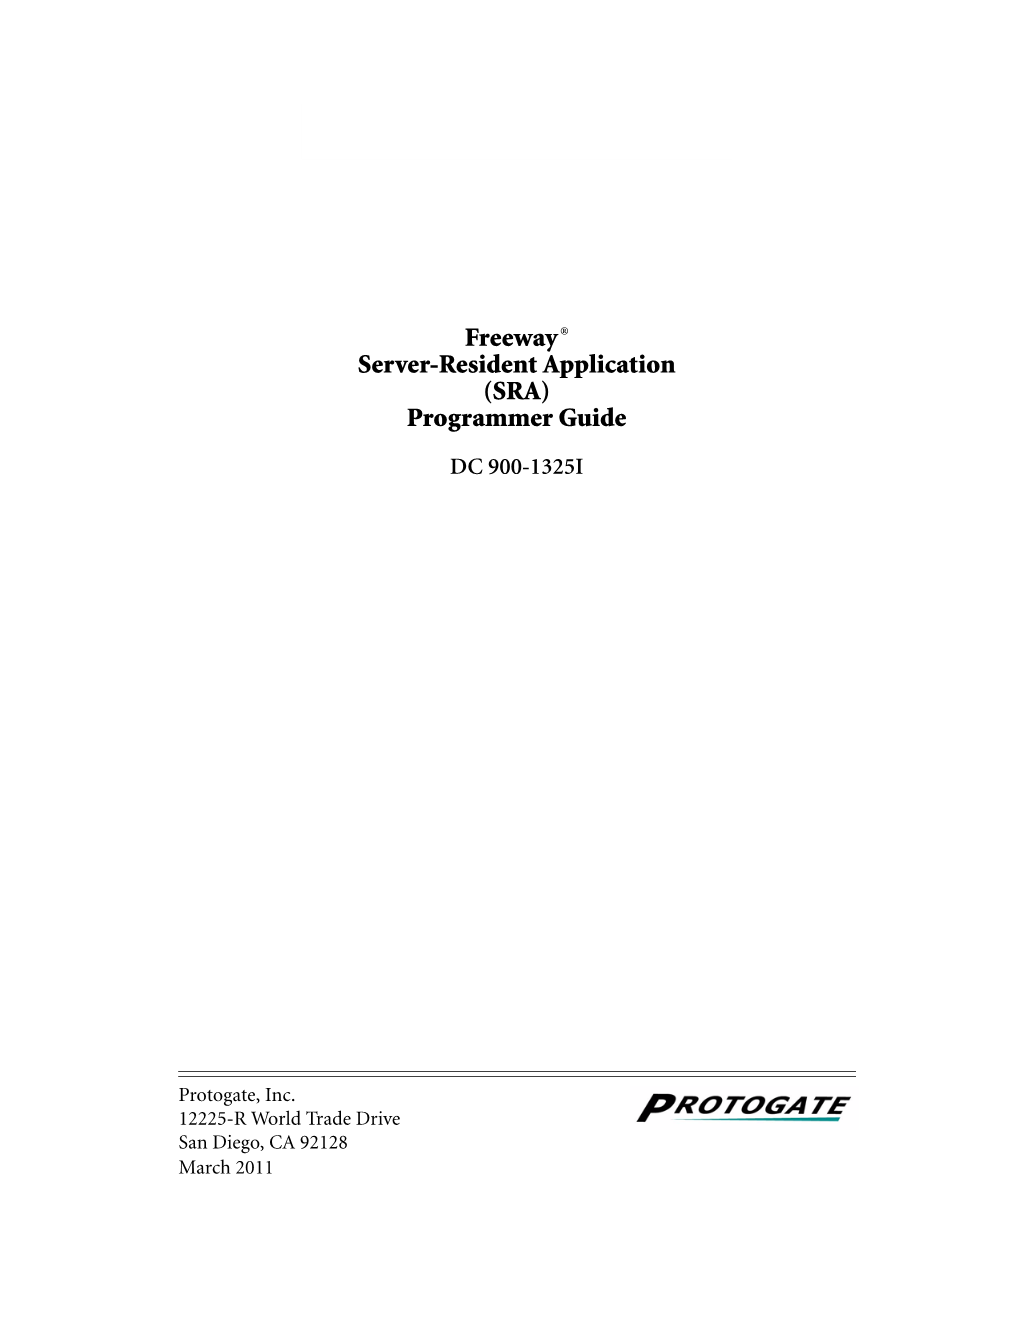 Freeway® Server-Resident Application (SRA) Programmer Guide